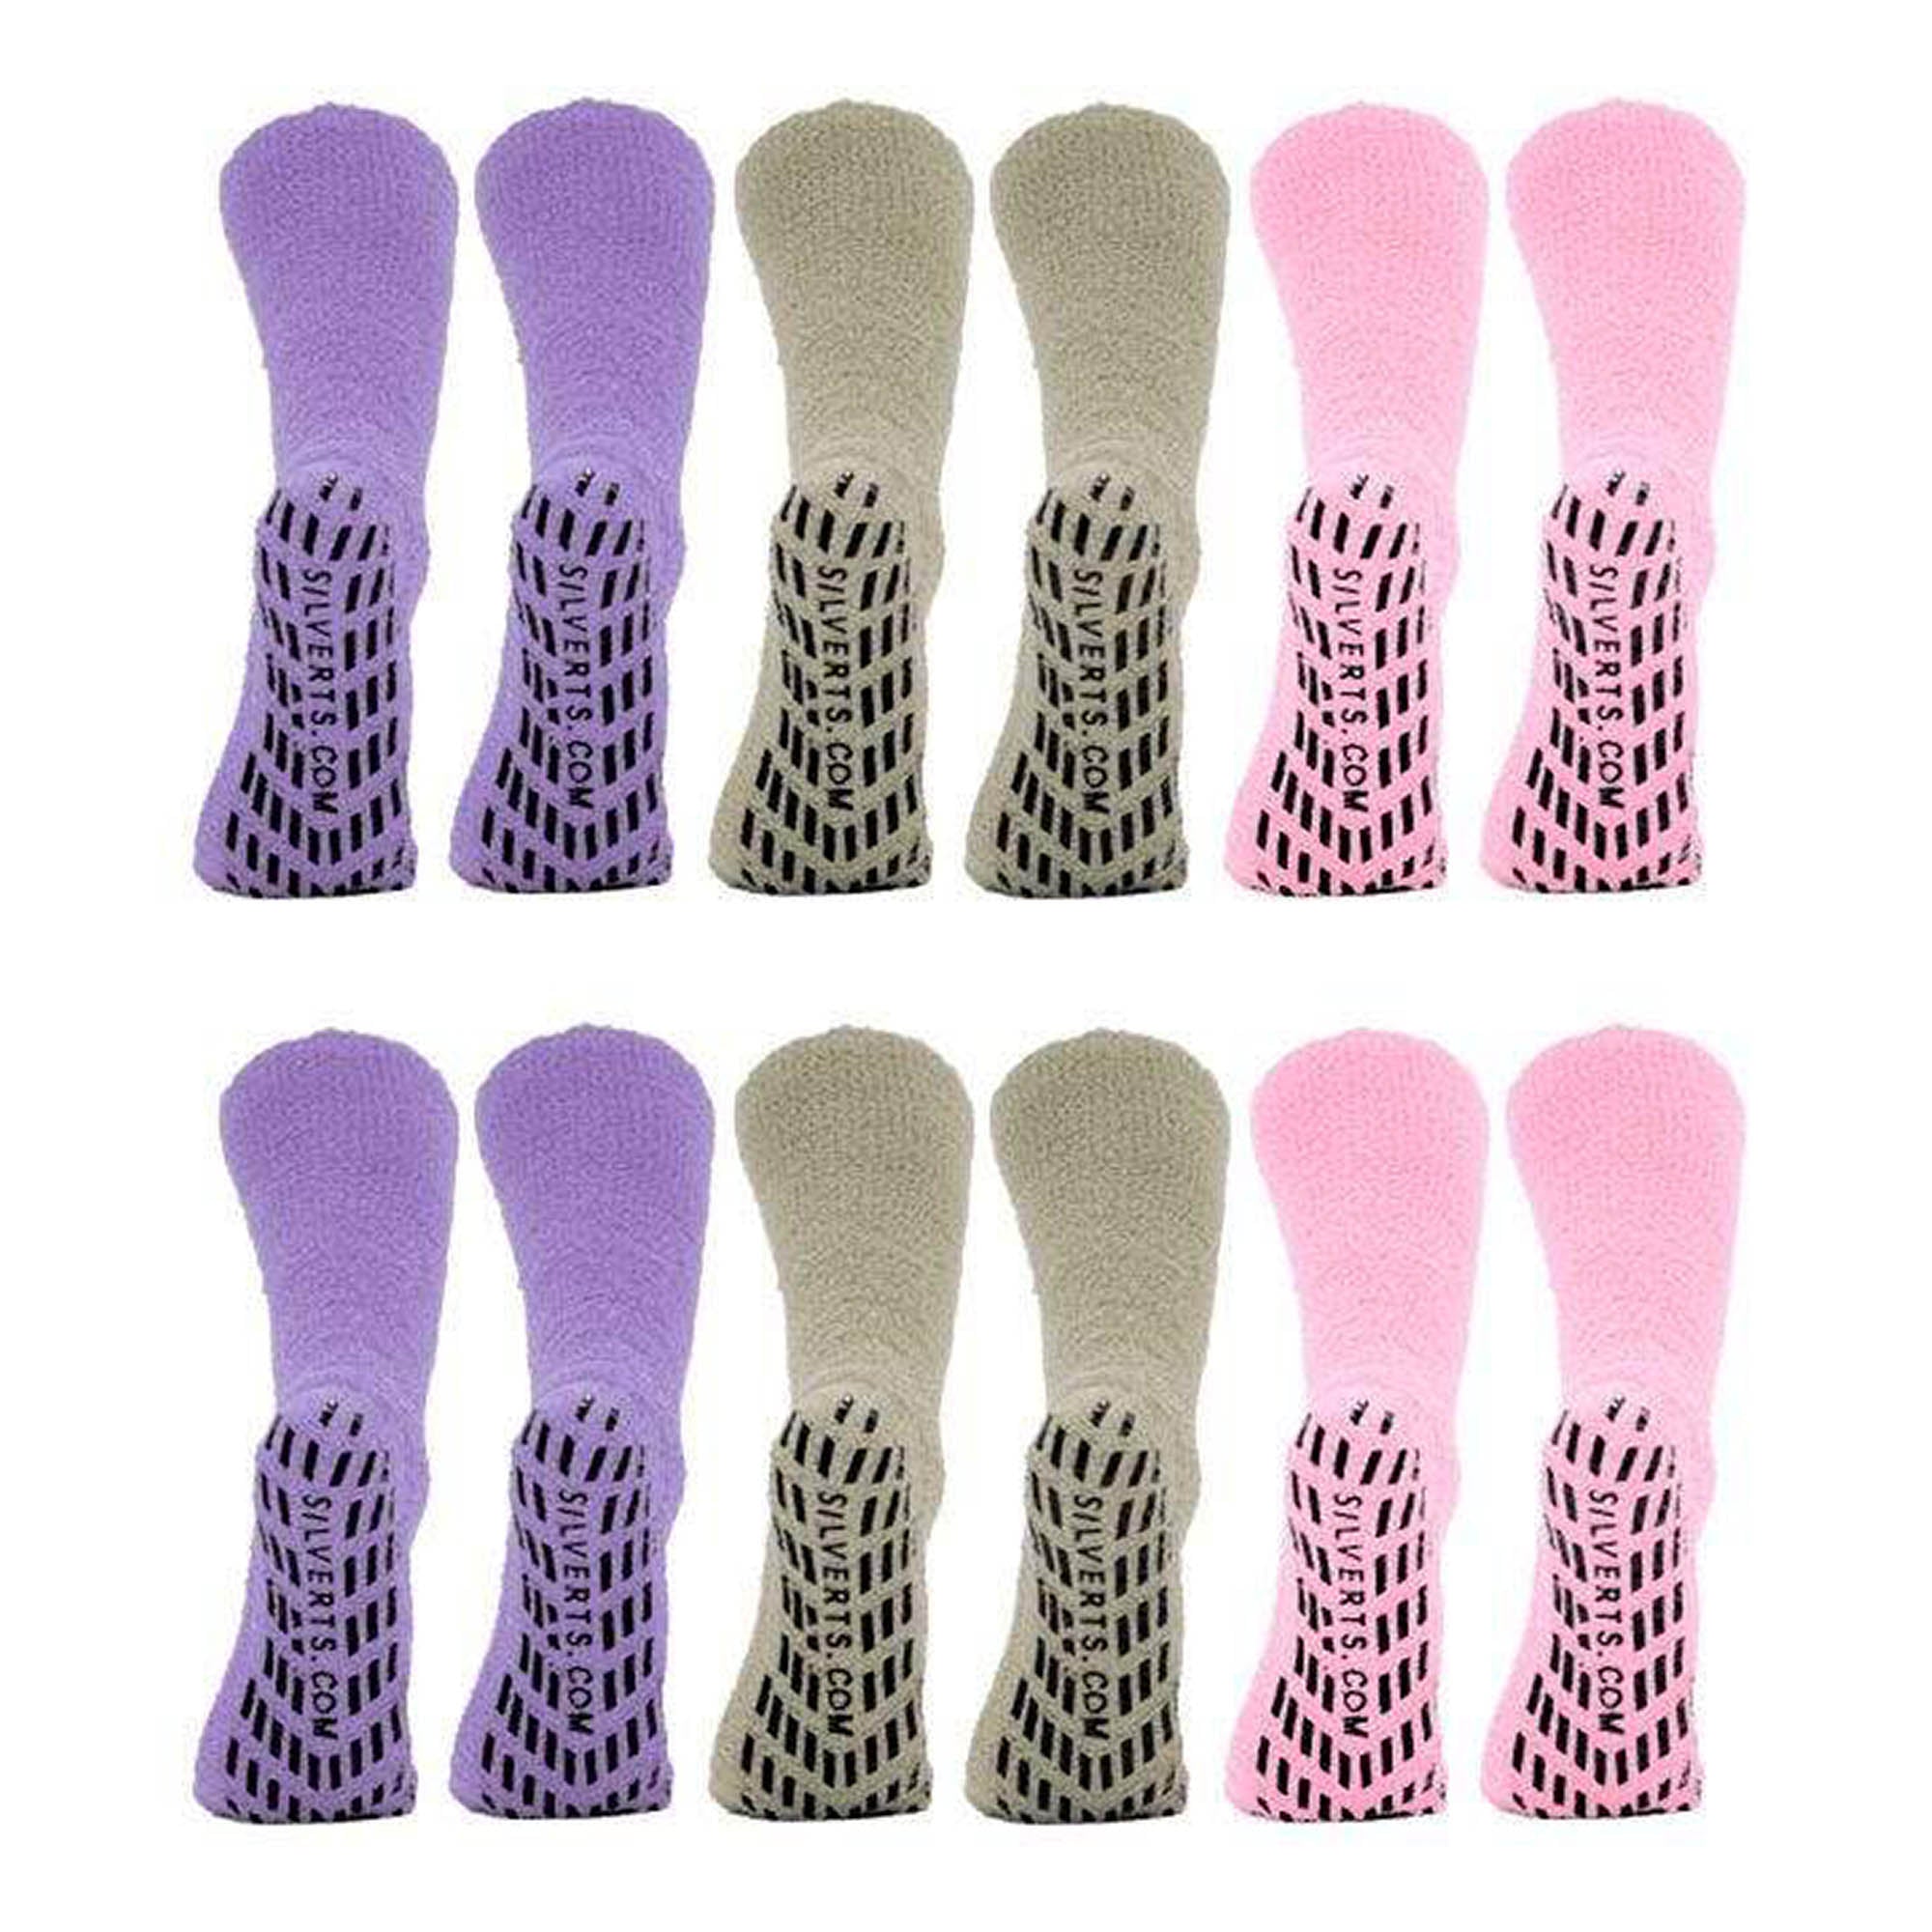 Silverts Slipper Socks - Set Of 6 - Women's Pack - XL